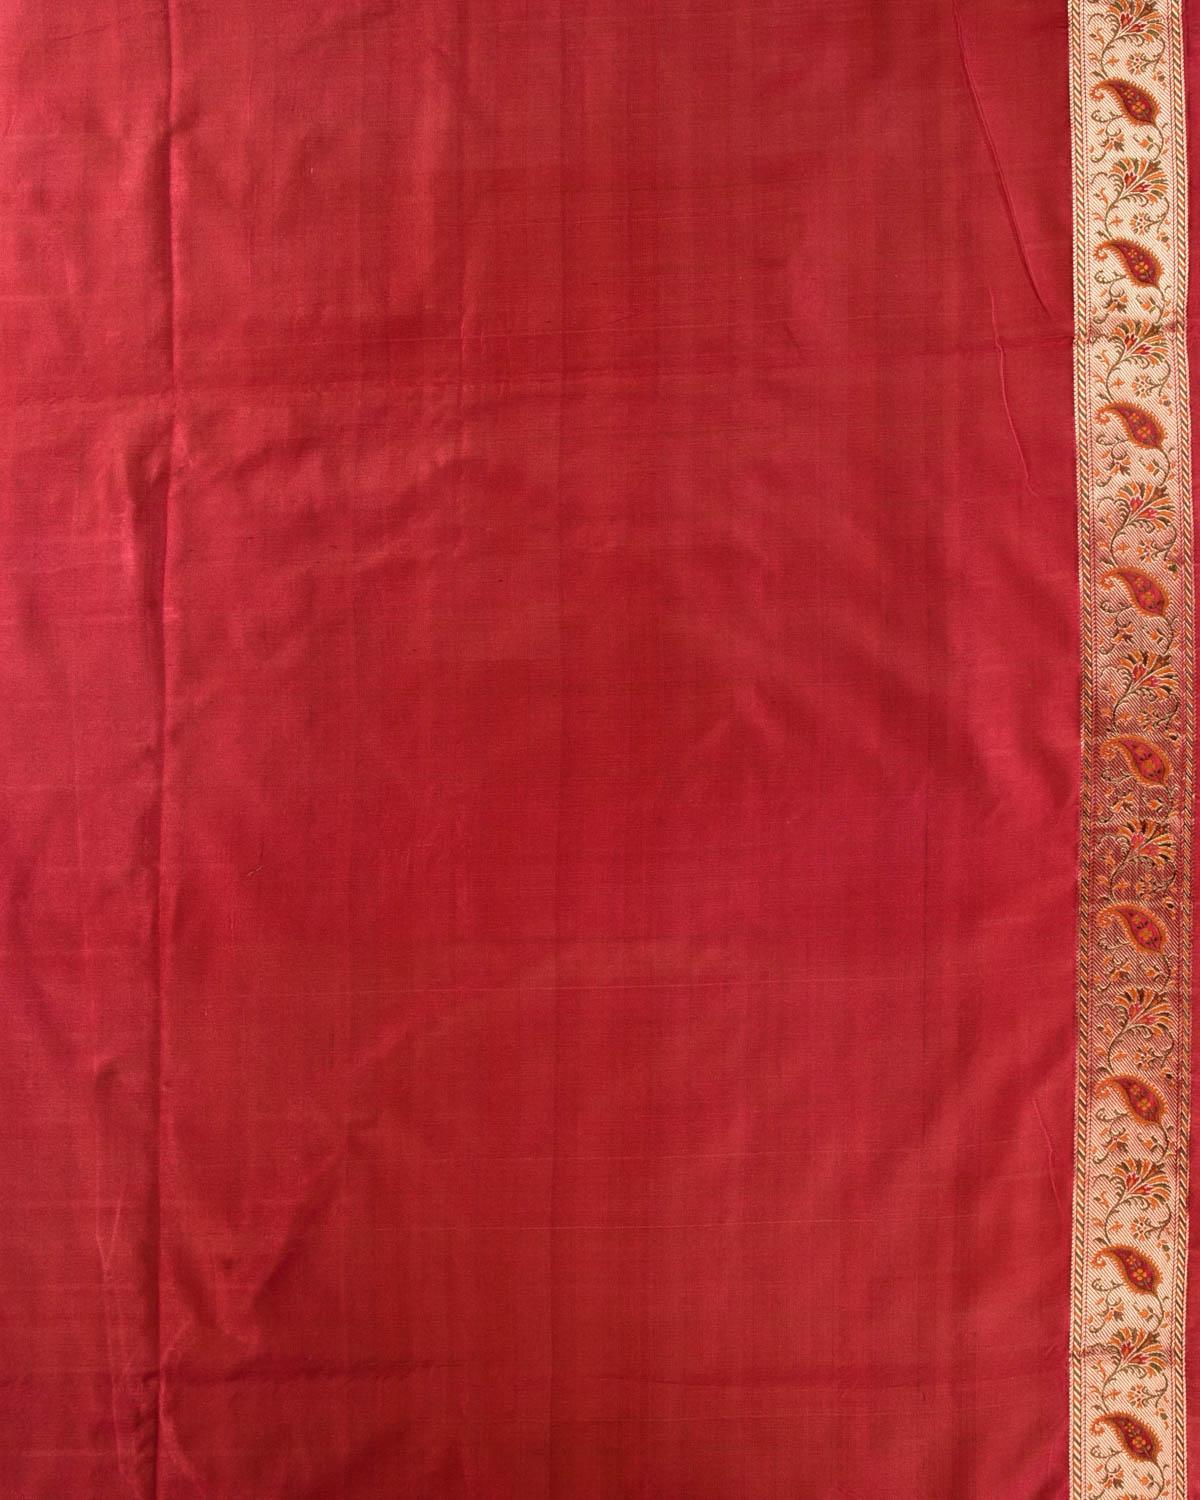 Gharchola Banarasi Silk Saree With Zari Work at Rs.945/Piece in jaipur  offer by anjali collection